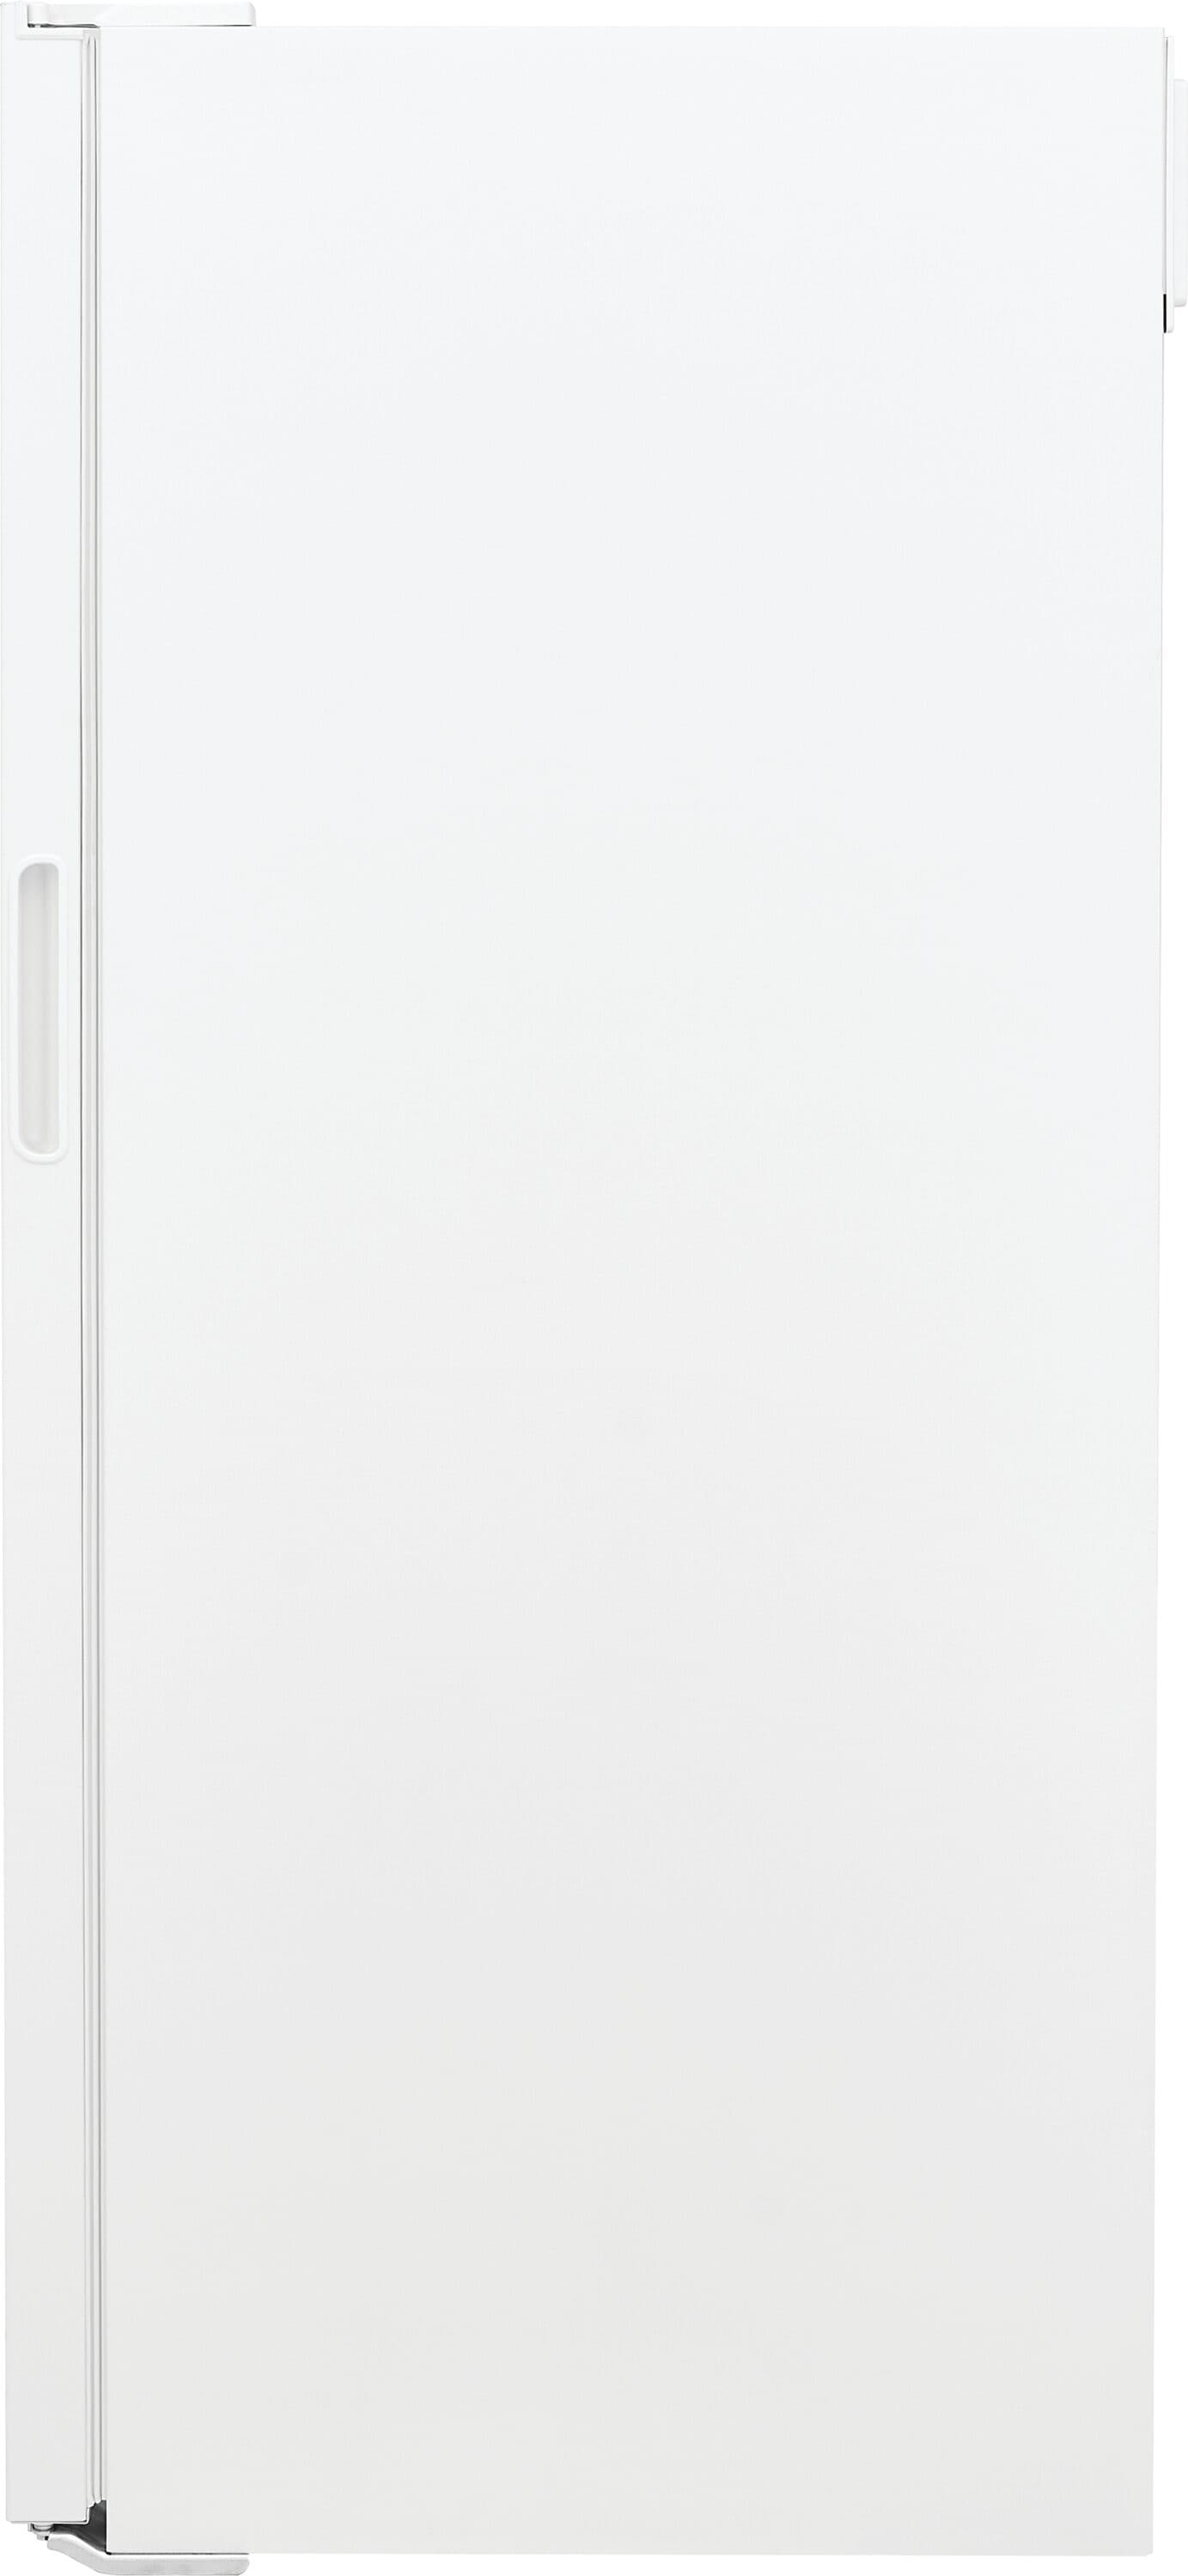 Frigidaire® 6.0 Cu. Ft. White Upright Freezer